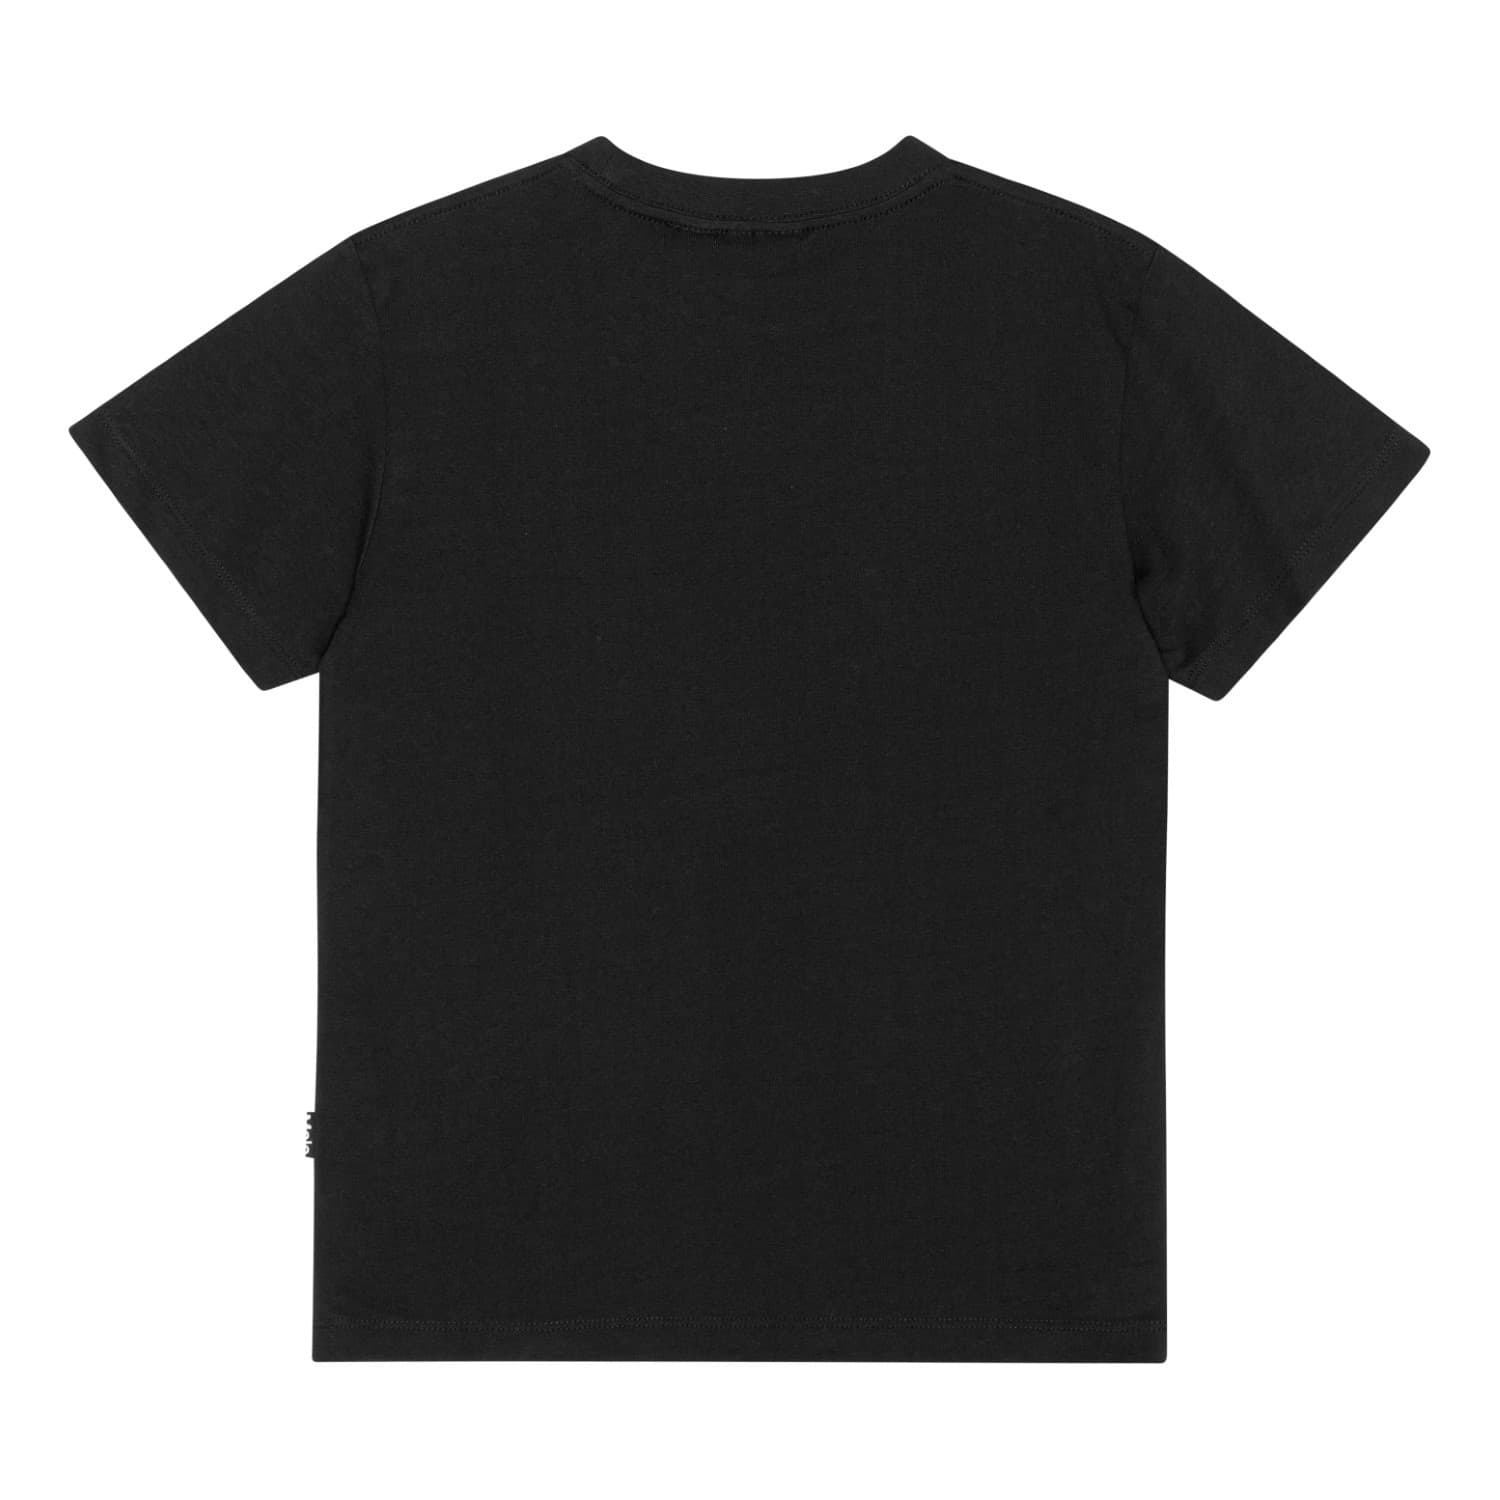 Roxo T-shirt Smiley (Black)